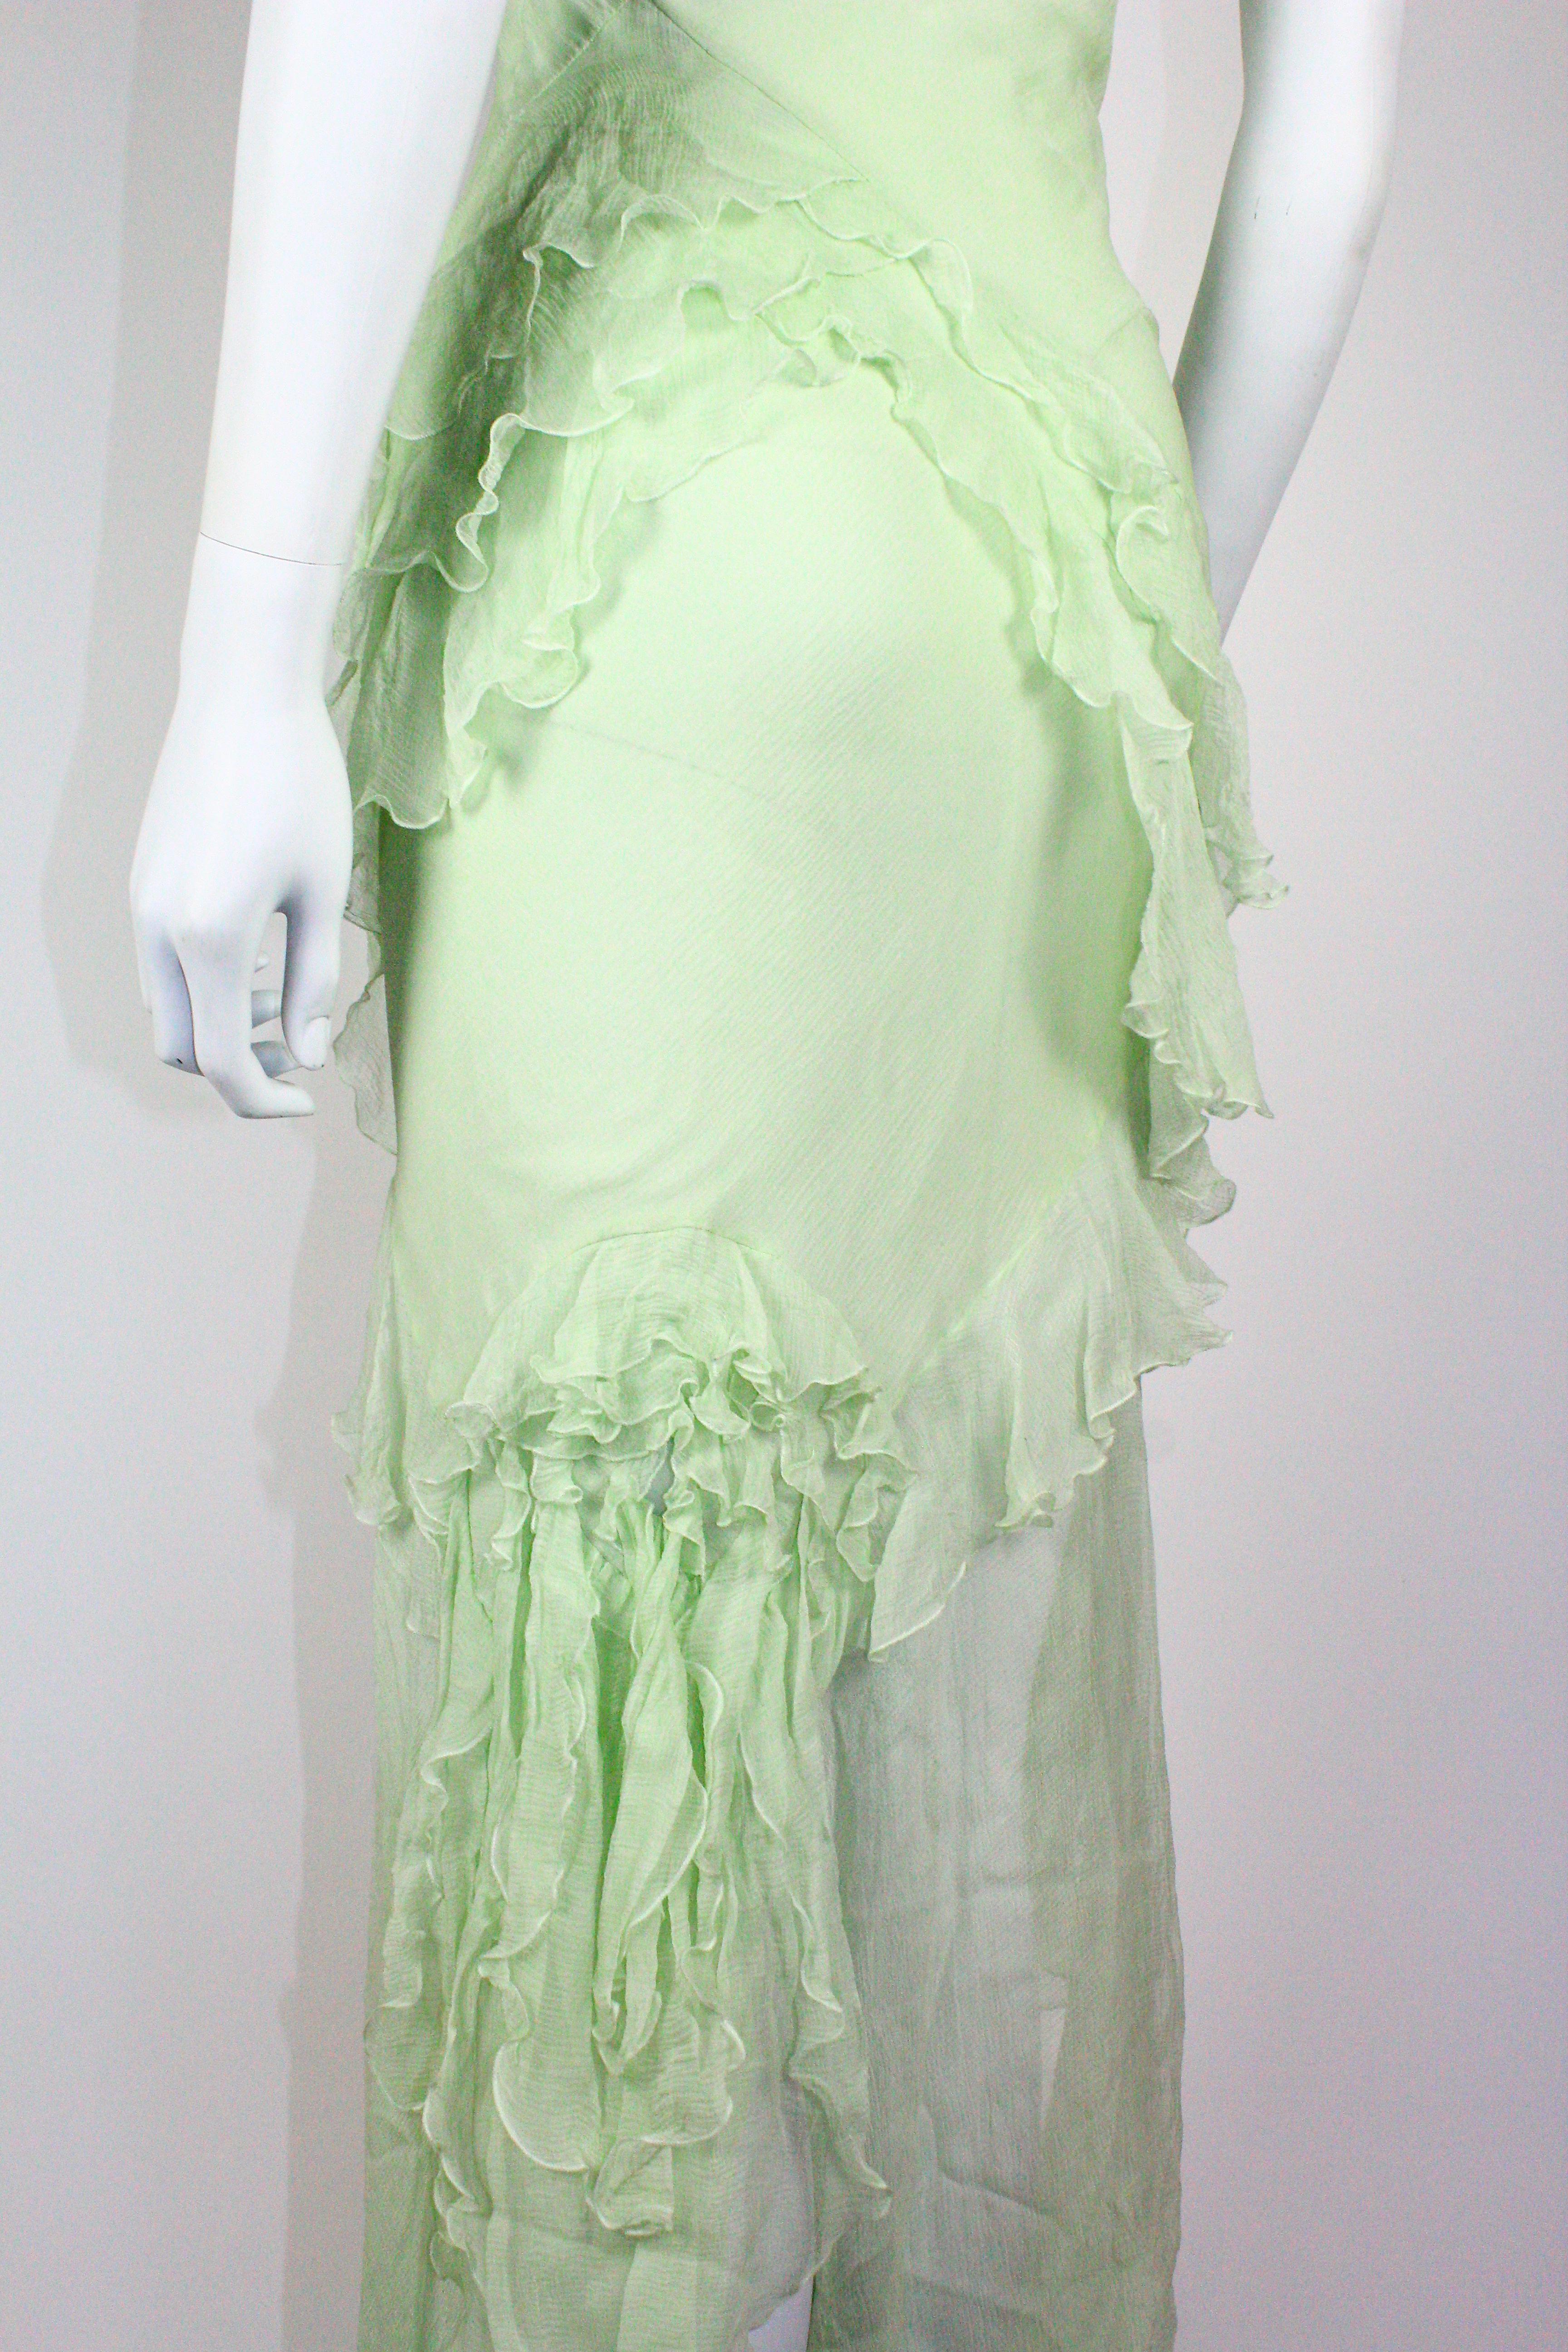 John Galliano 'Delores' Mint Green Silk Dress, F/W 1995 For Sale 5